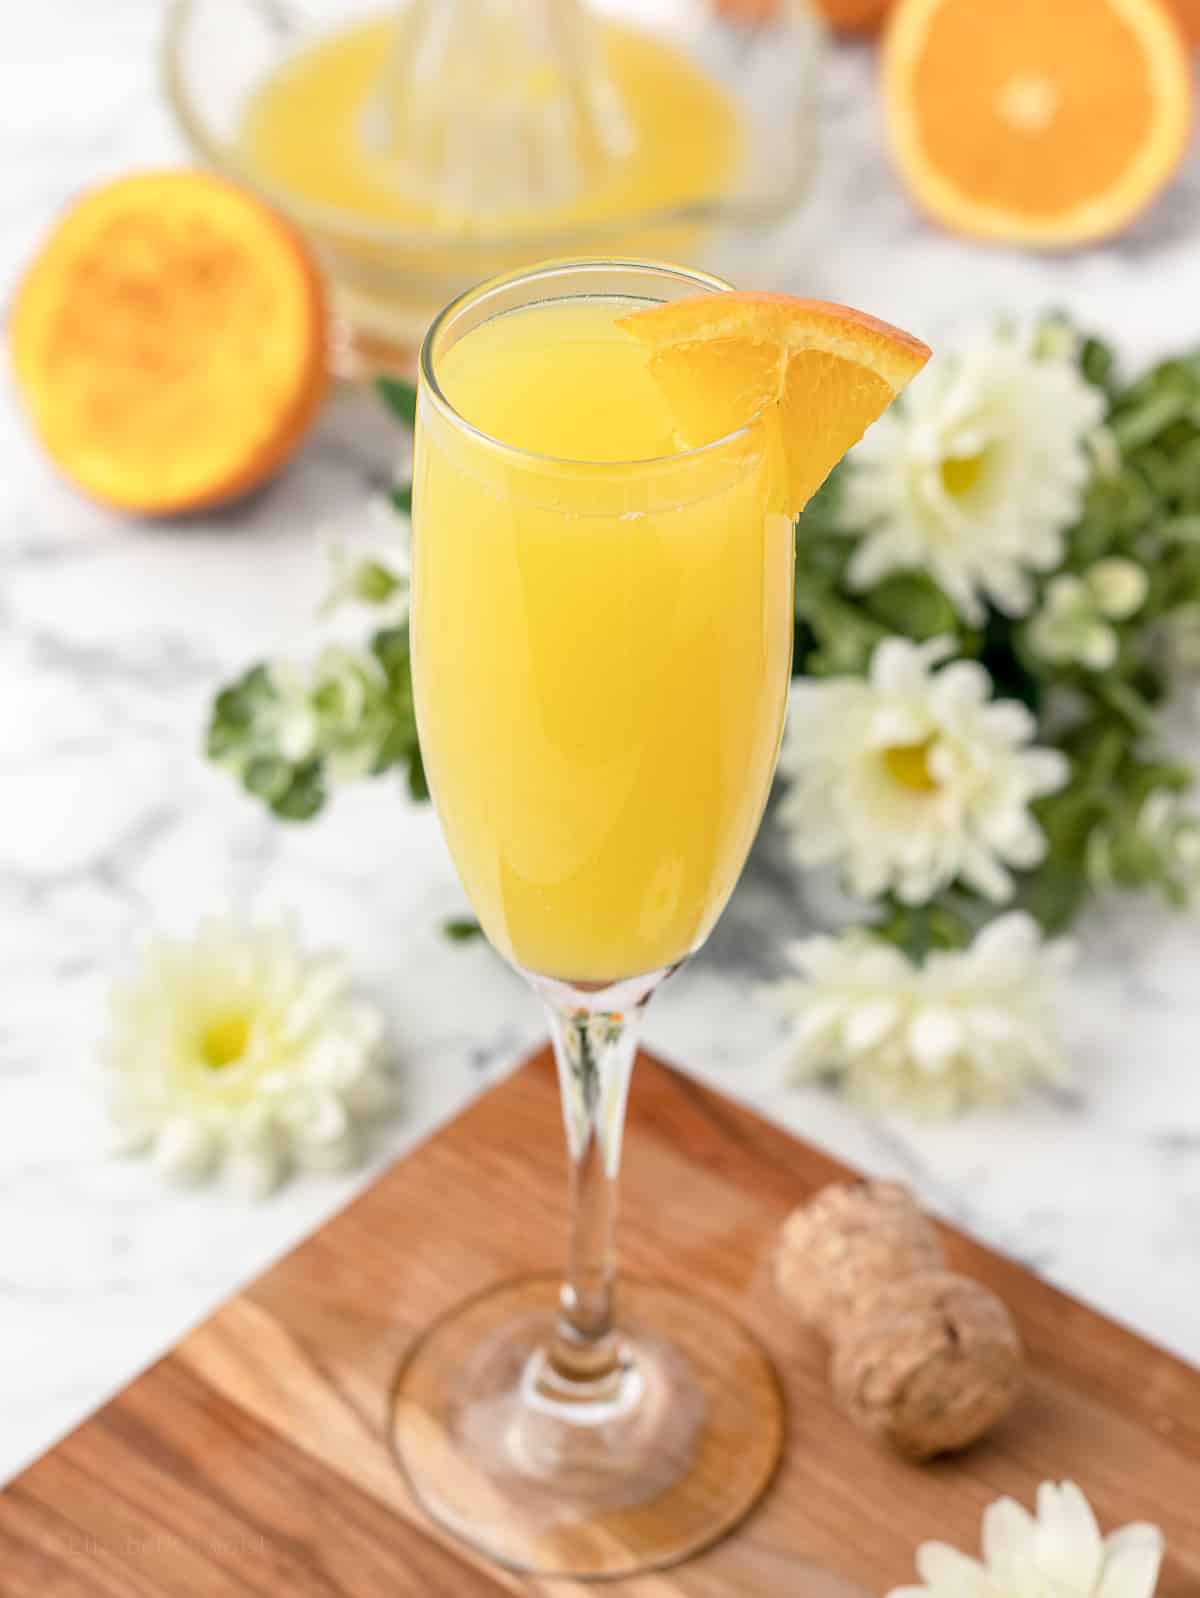 Classic mimosa with an orange wedge garnish.